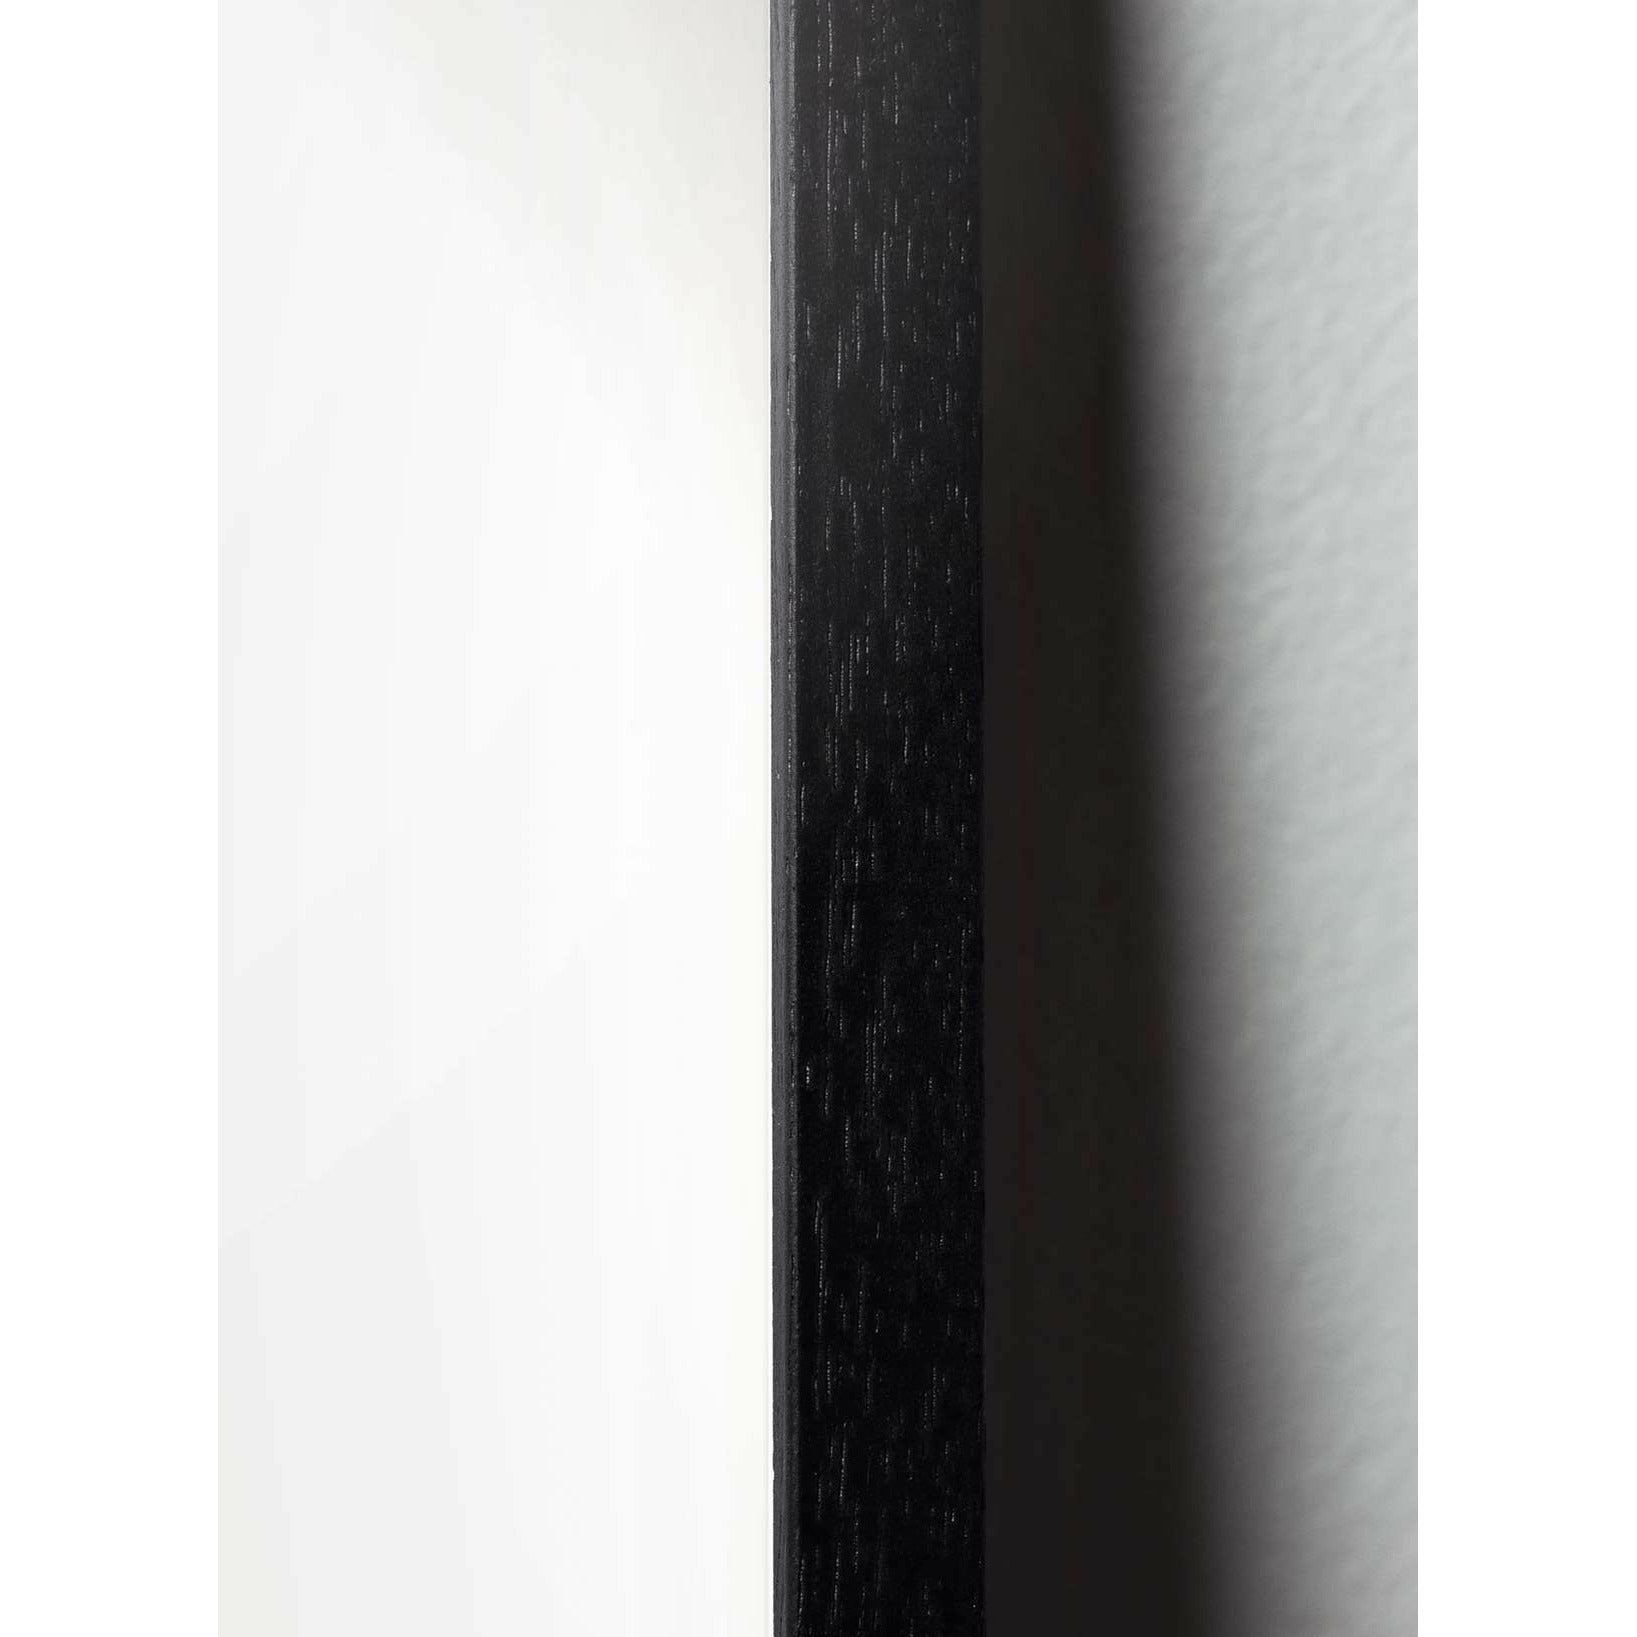 Póster de figuras de huevo de creación, marco hecho de madera lacada negra de 30x40 cm, marrón